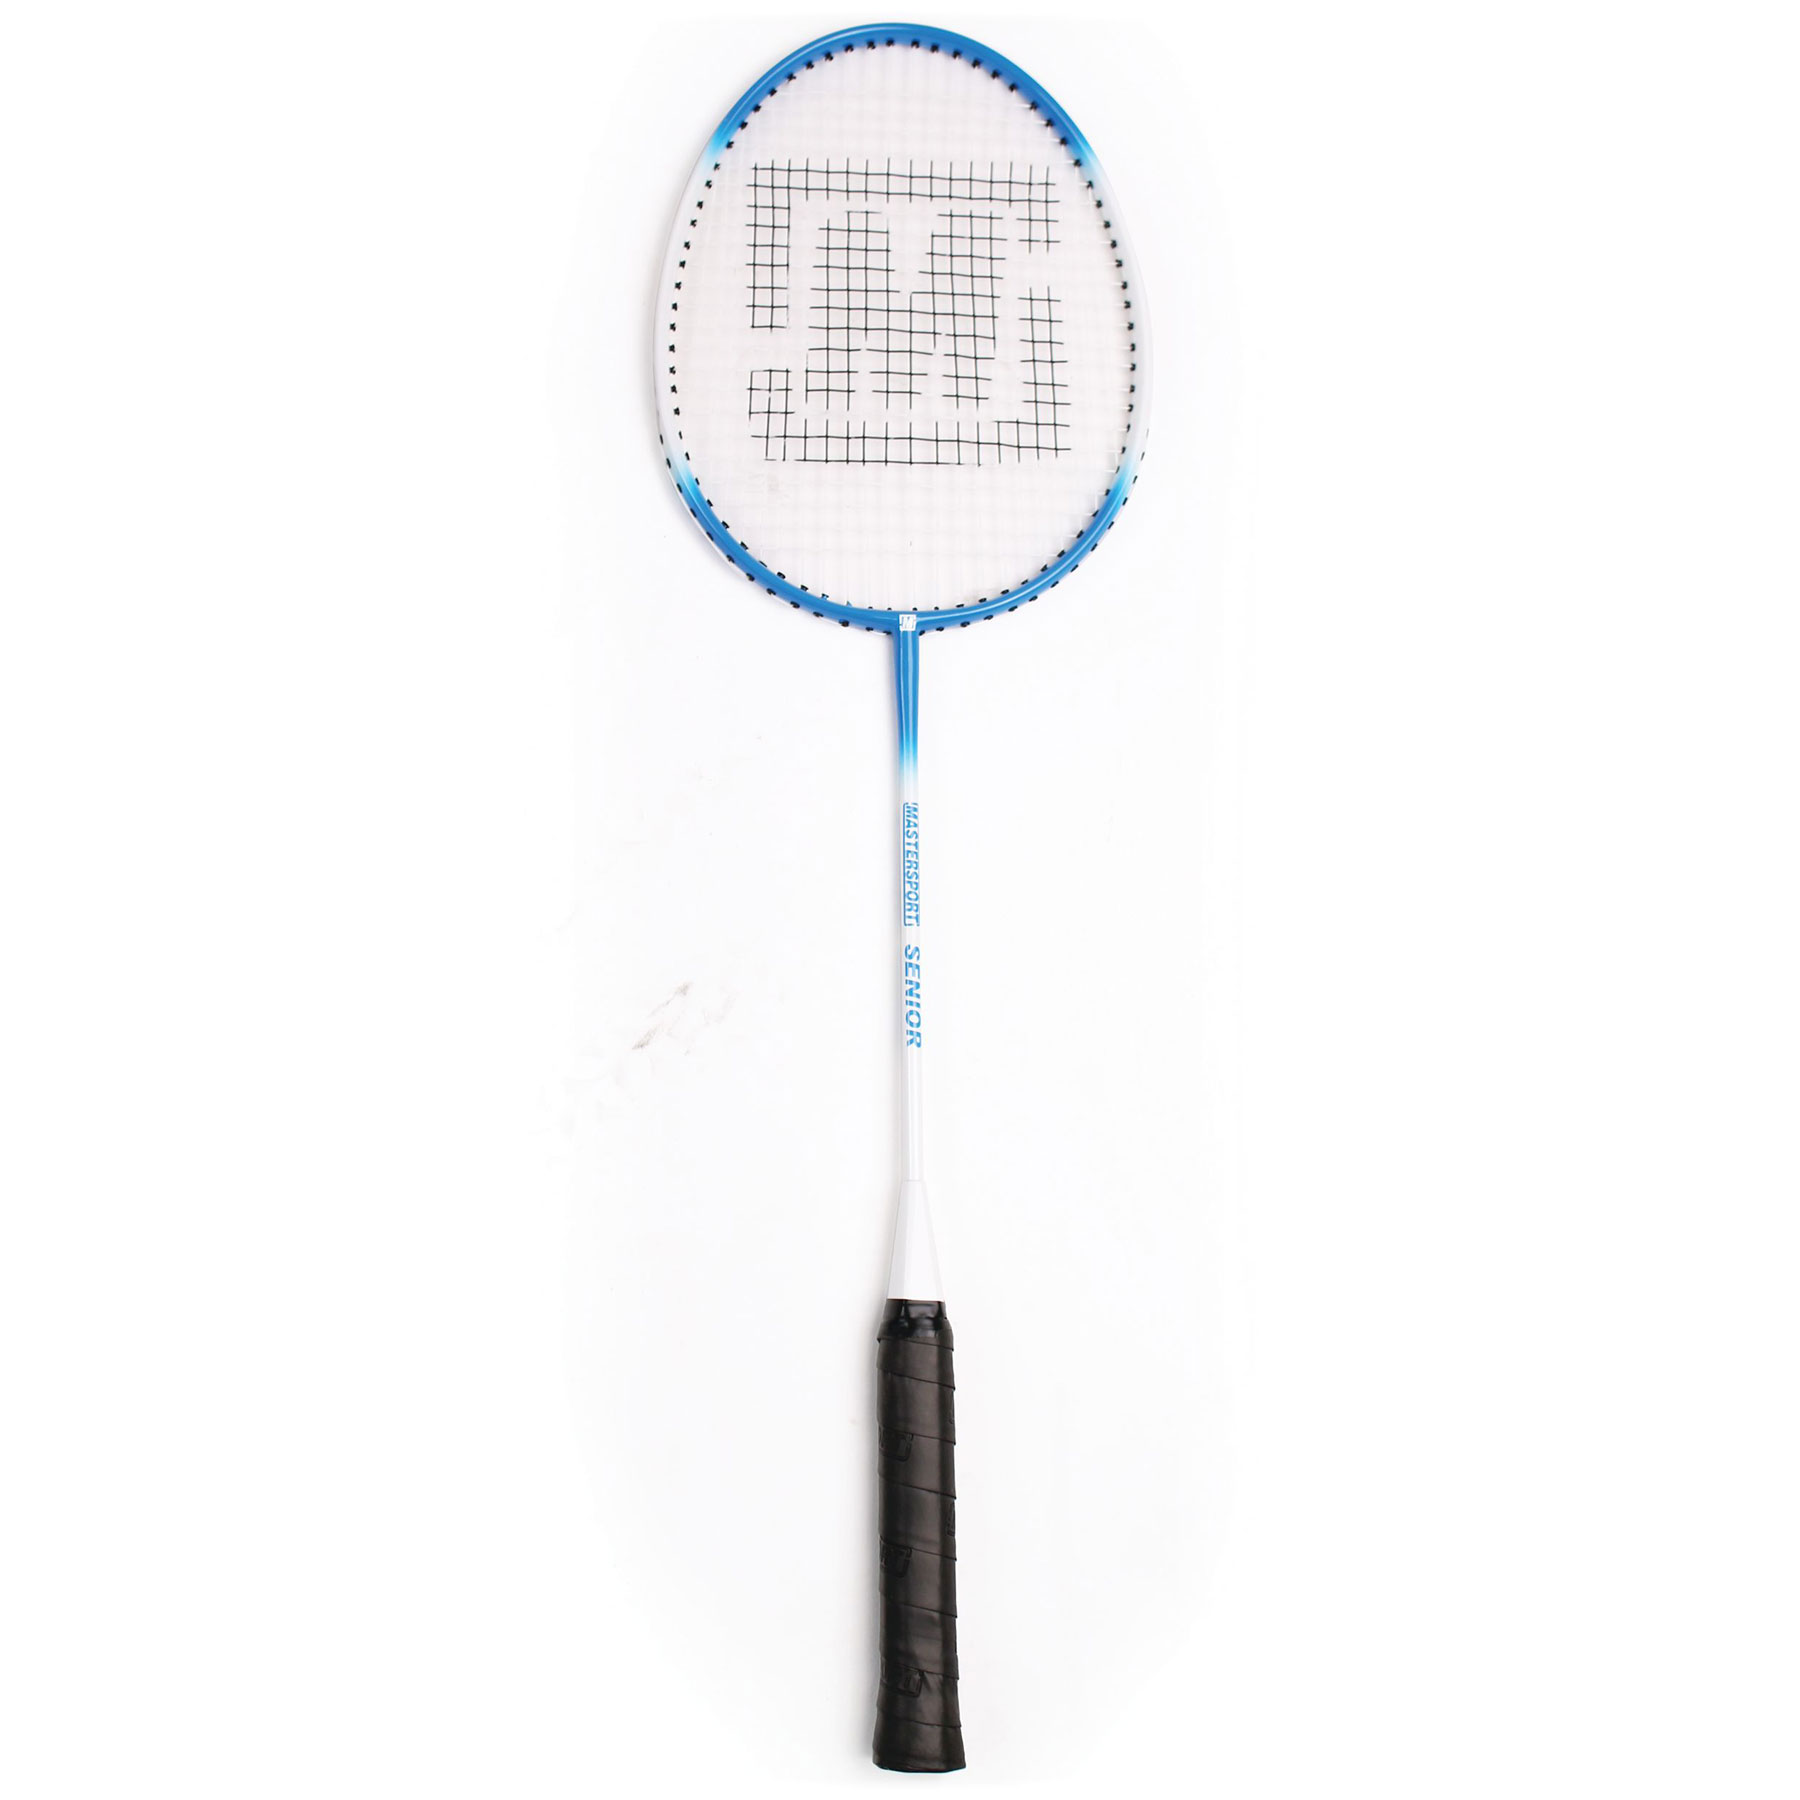 Mastersport Senior Badminton Racket